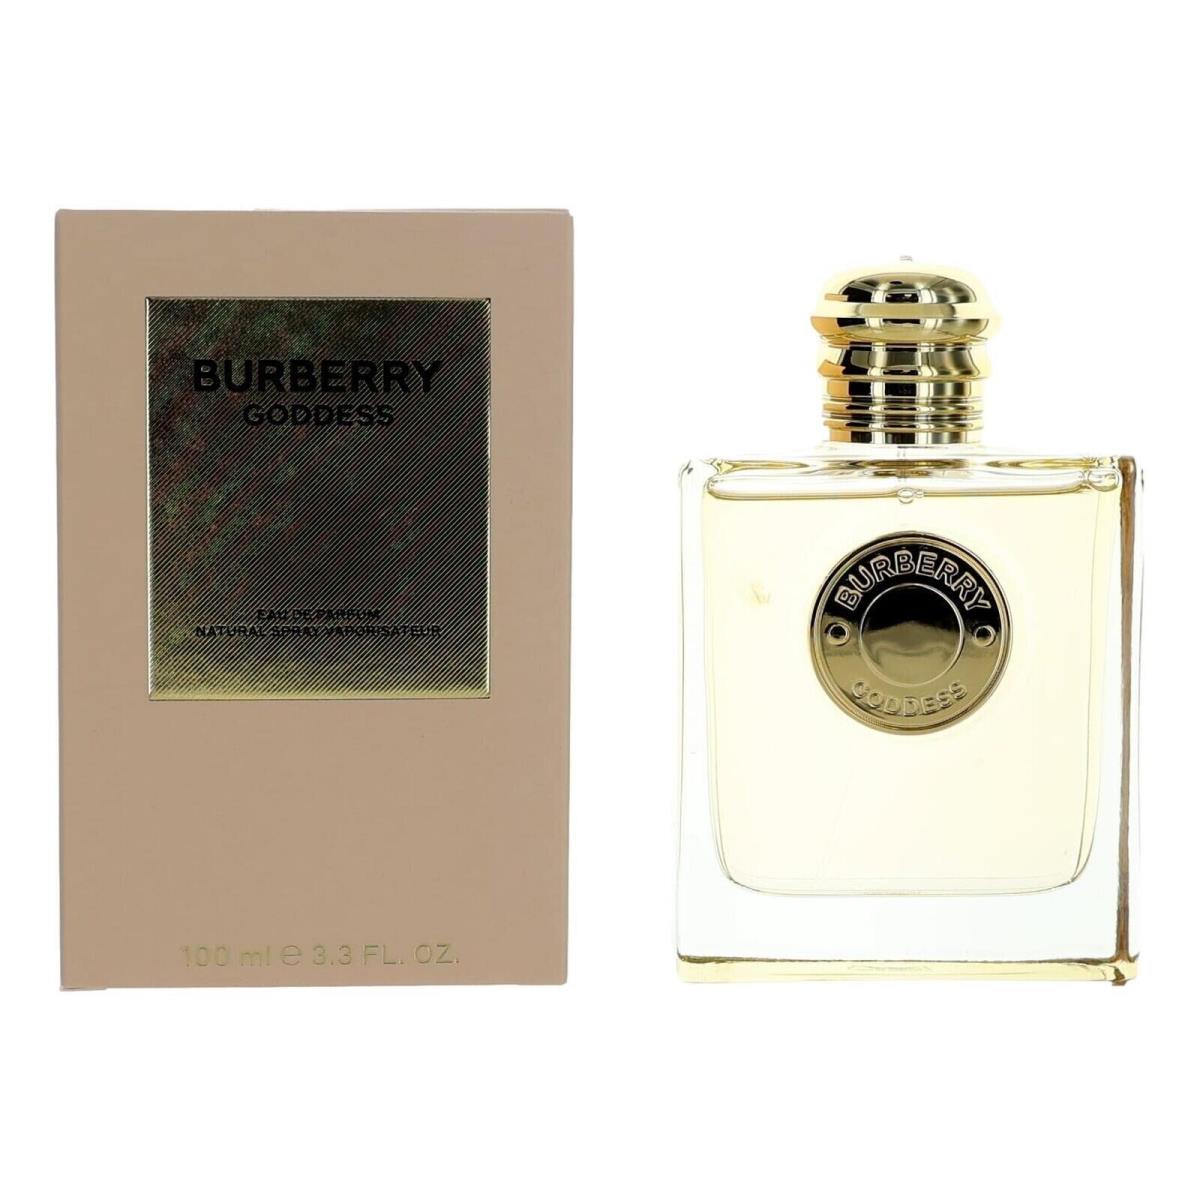 Burberry Goddess by Burberry 3.3 oz Edp Spray For Women